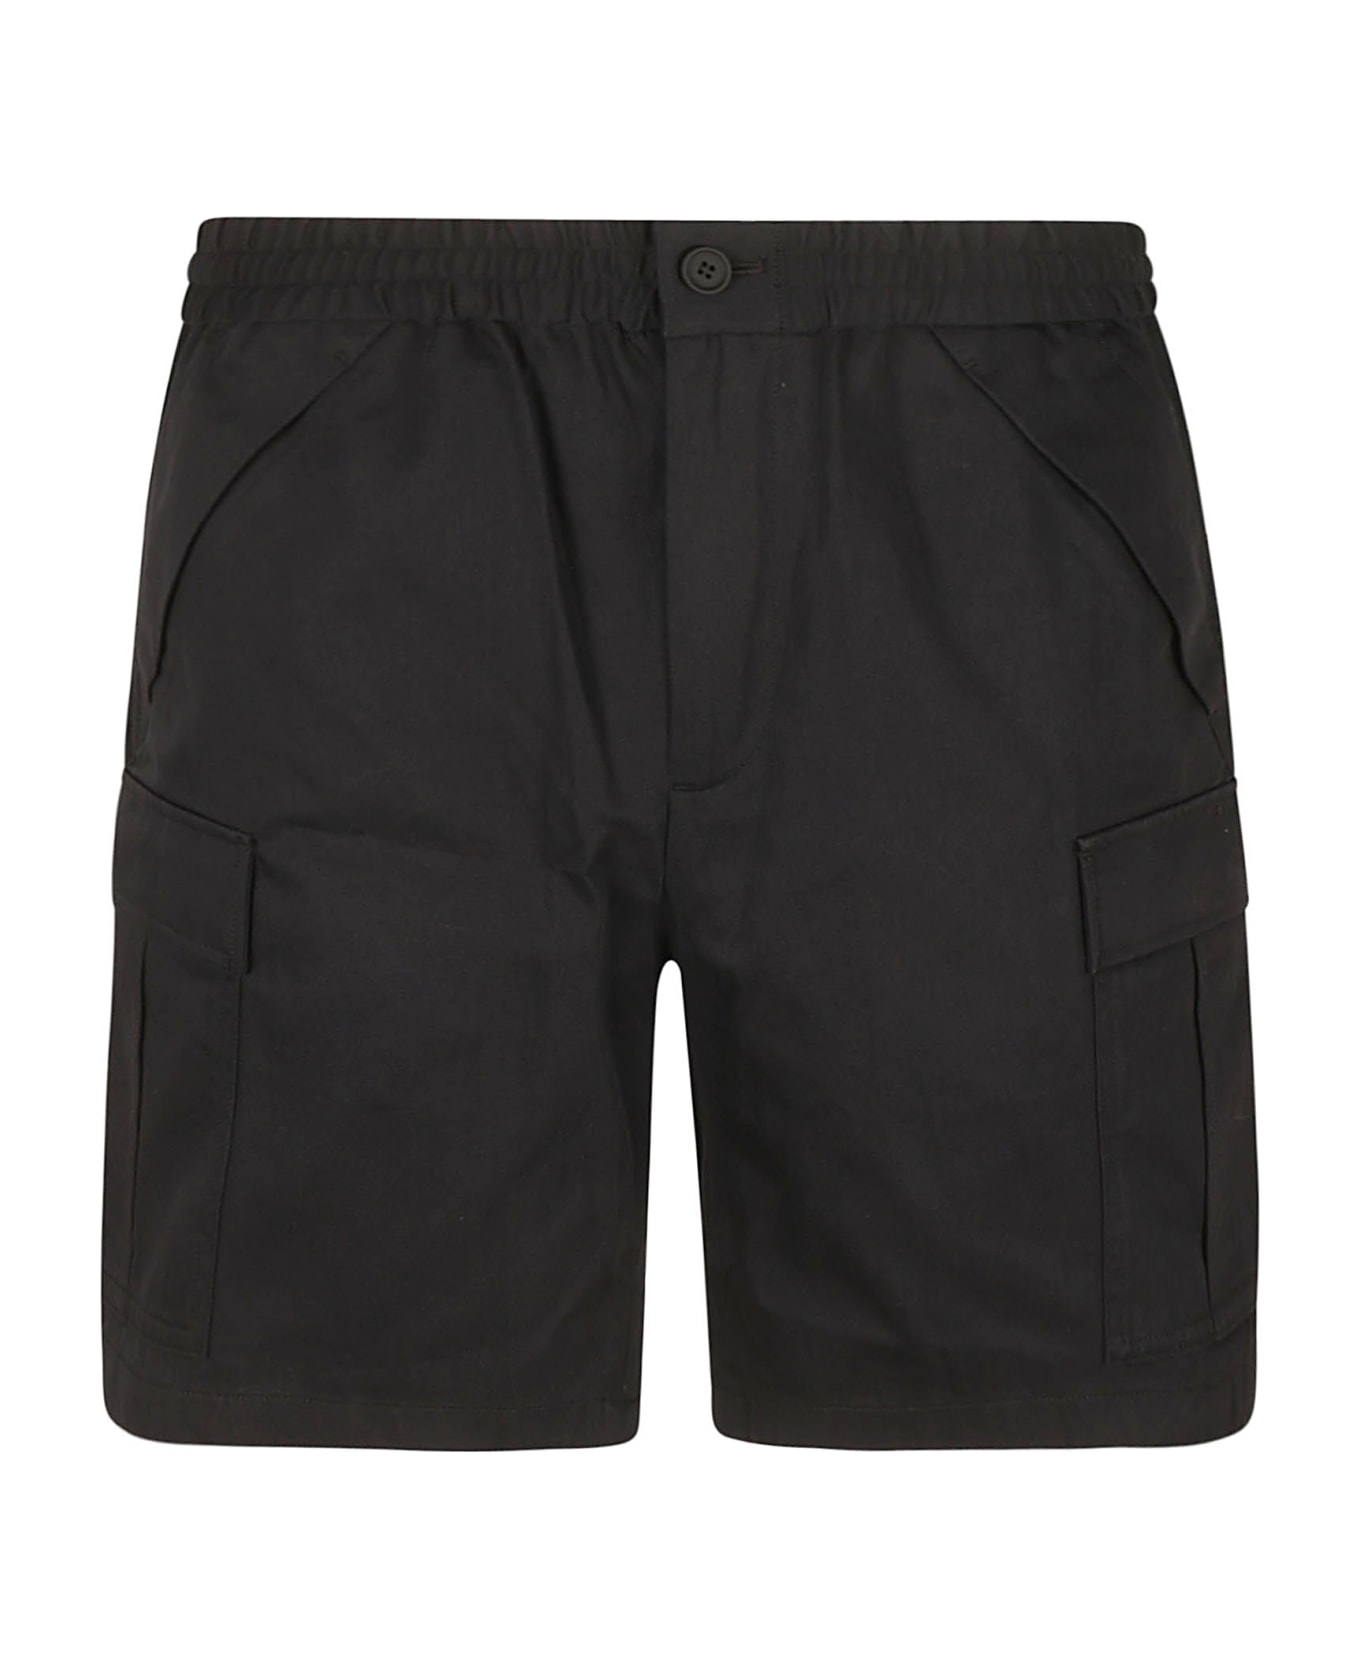 Burberry Capleton Shorts